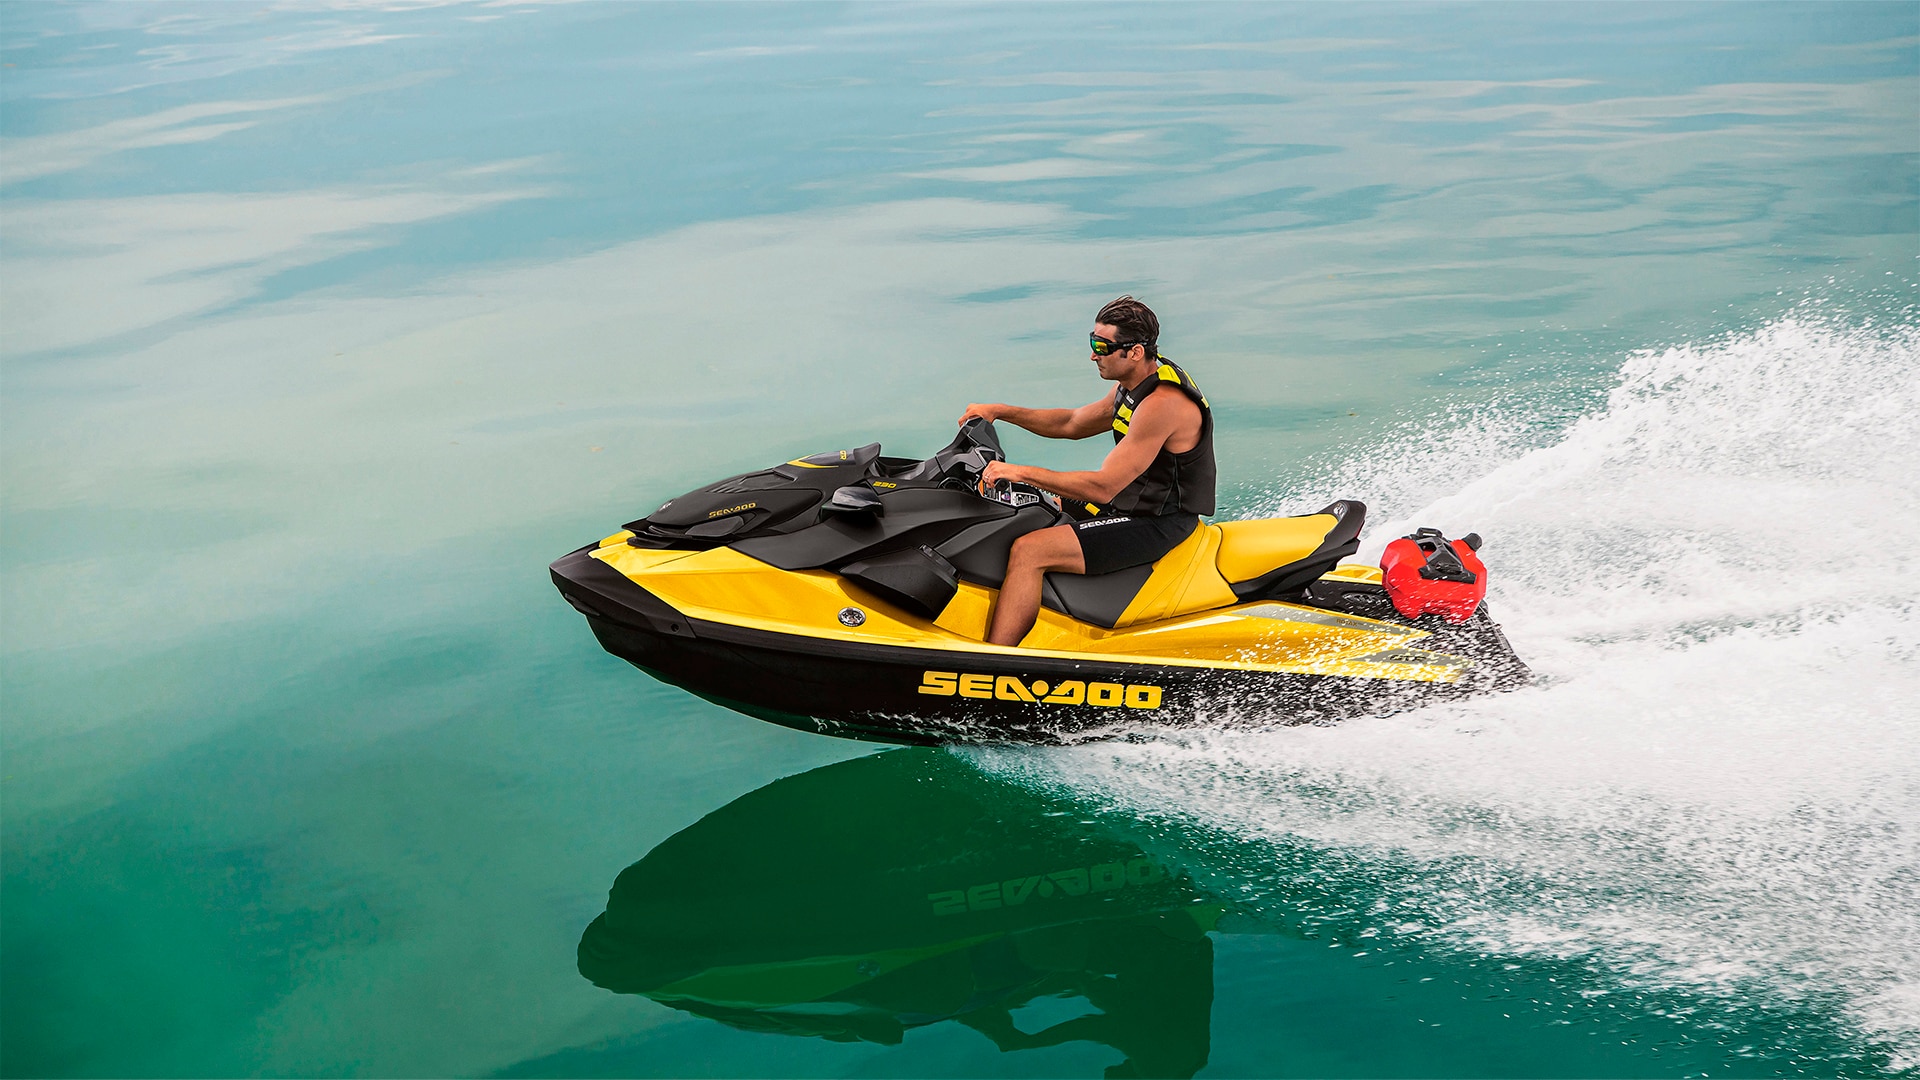 Rider driving a Sea-Doo GTR personal watercraft